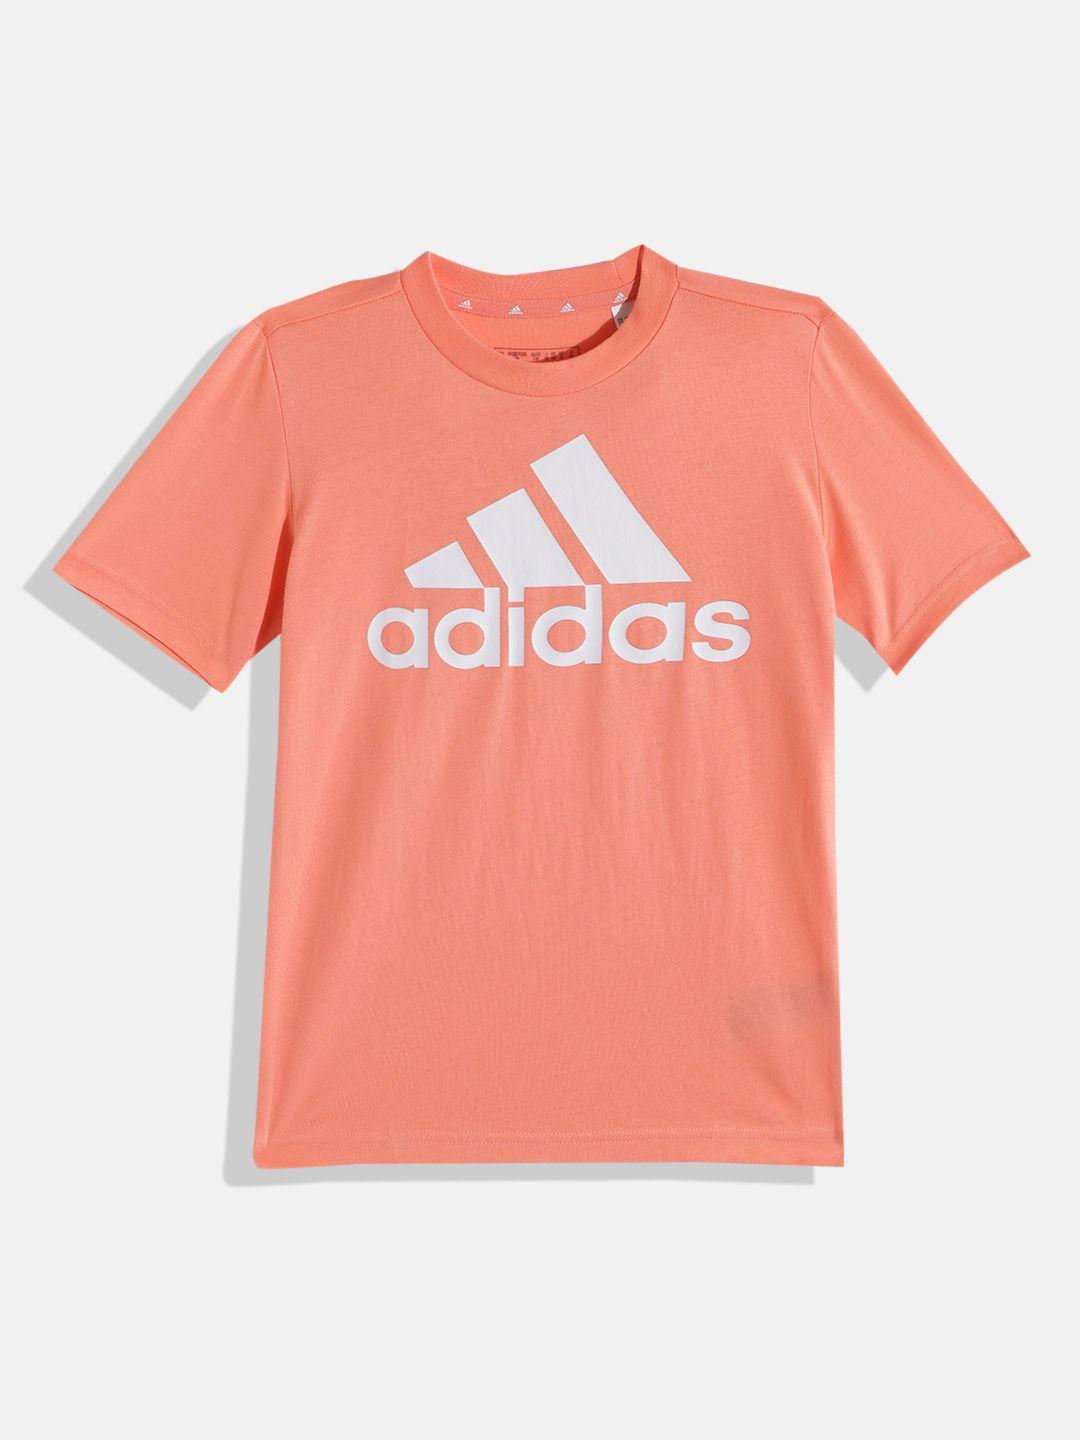 adidas kids brand logo printed pure cotton bl tee t-shirt